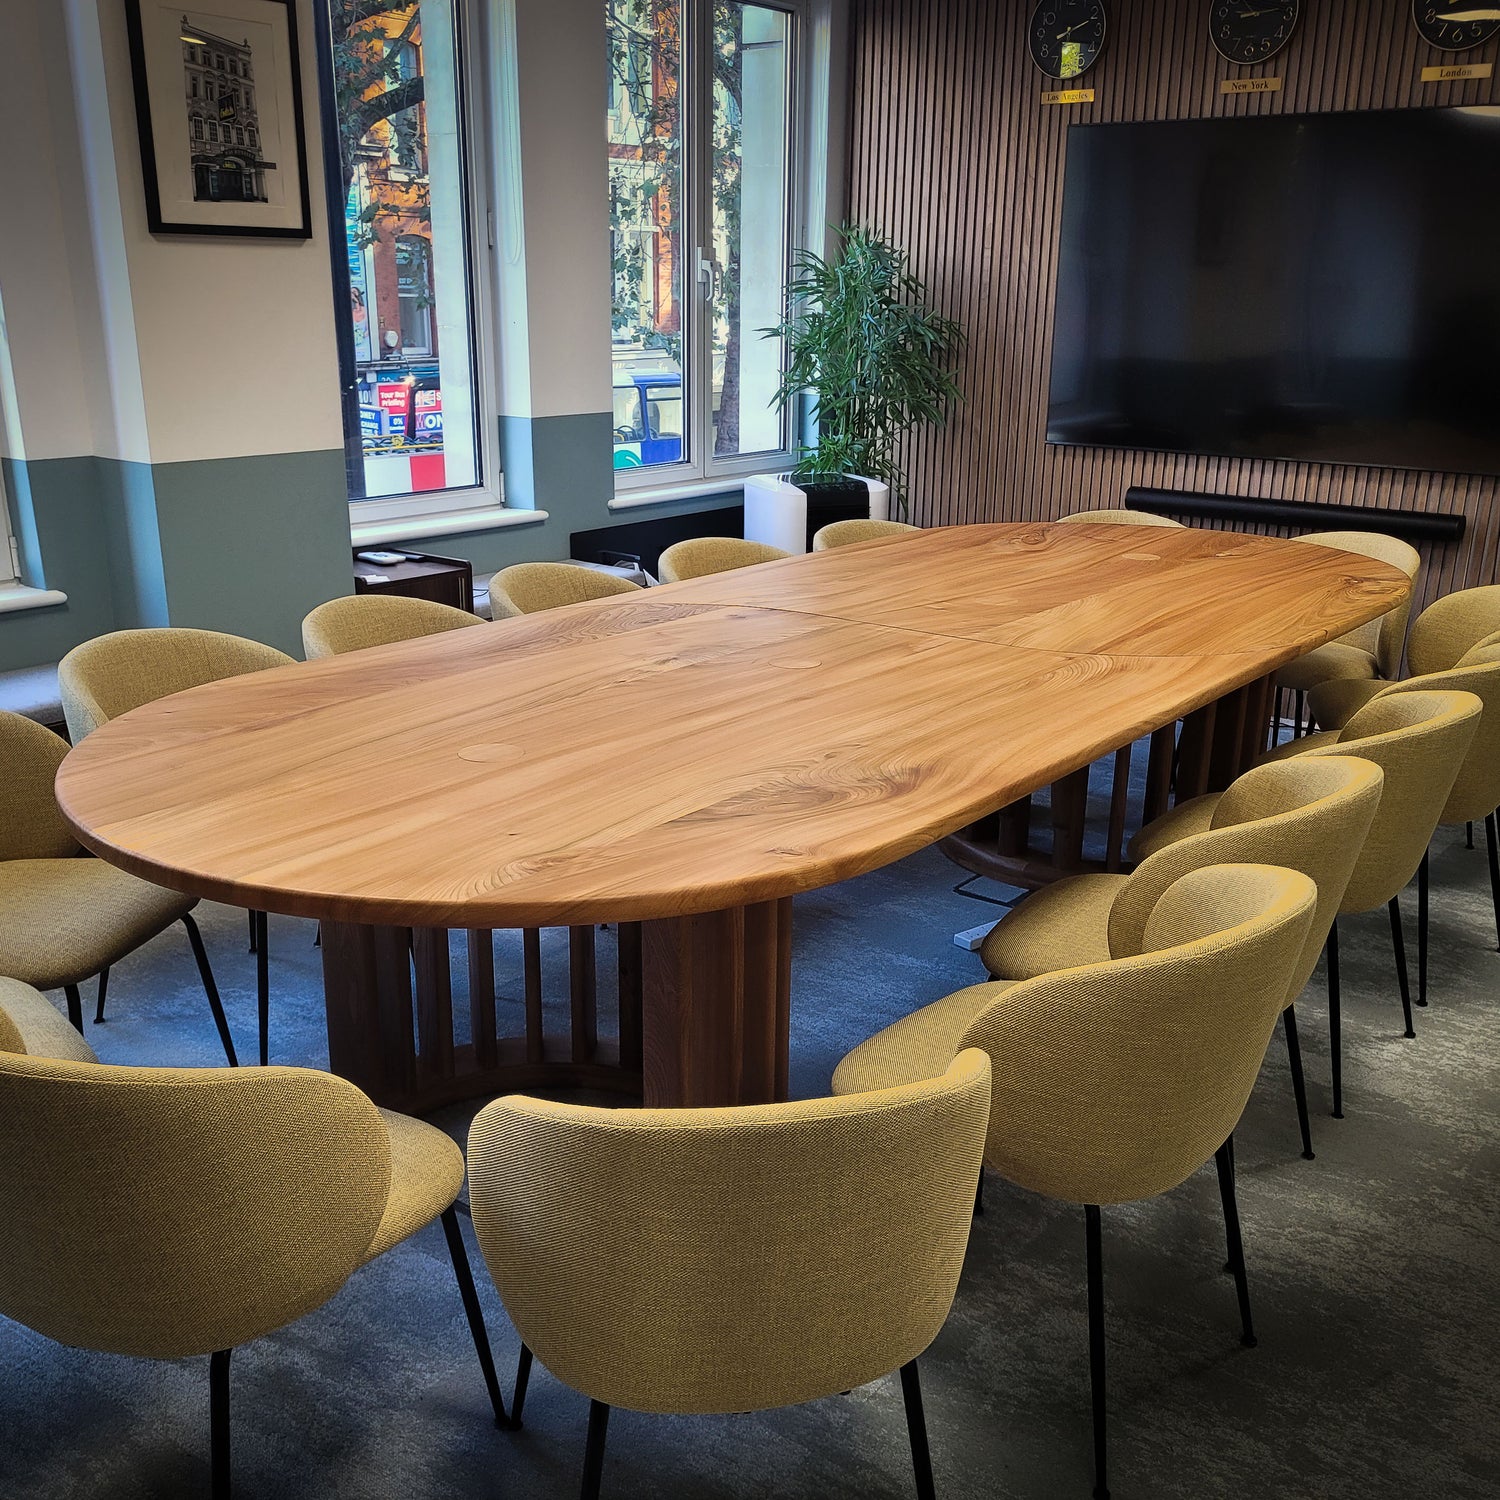 Elm boardroom table handmade for London's Theatreland